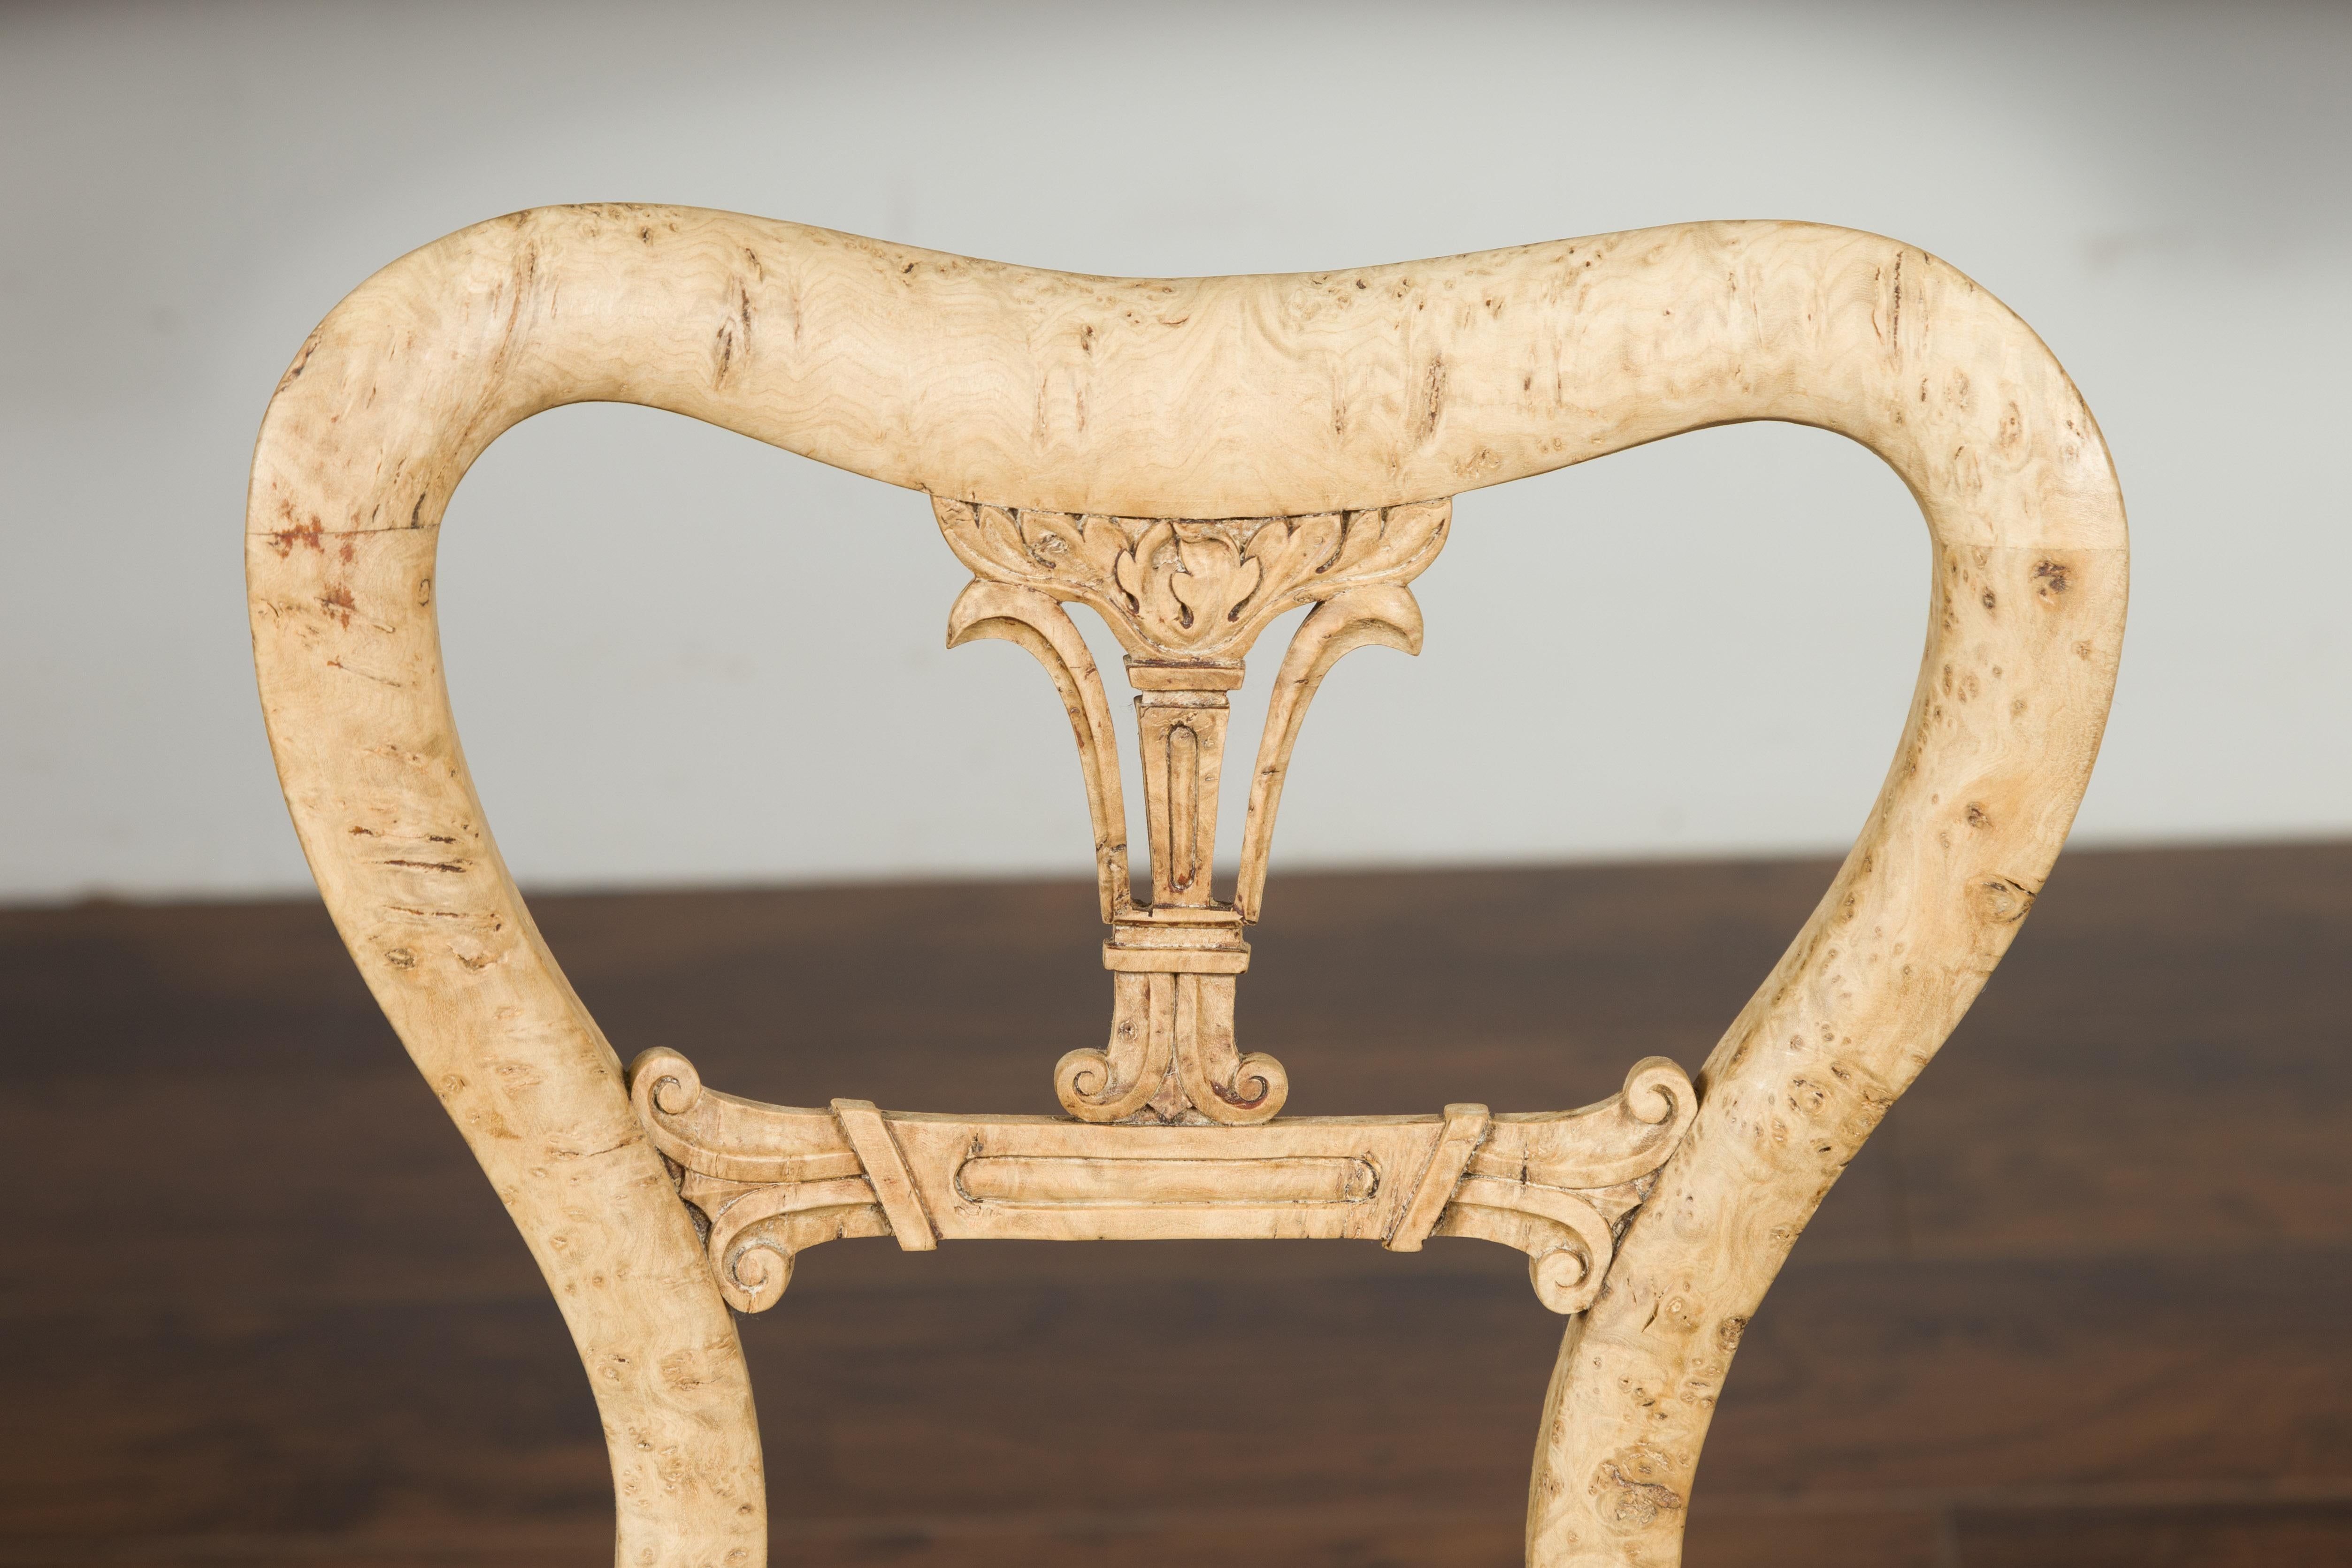 Austrian 1840s Biedermeier Bleached Burled Walnut Swivel Chair with Upholstery For Sale 2